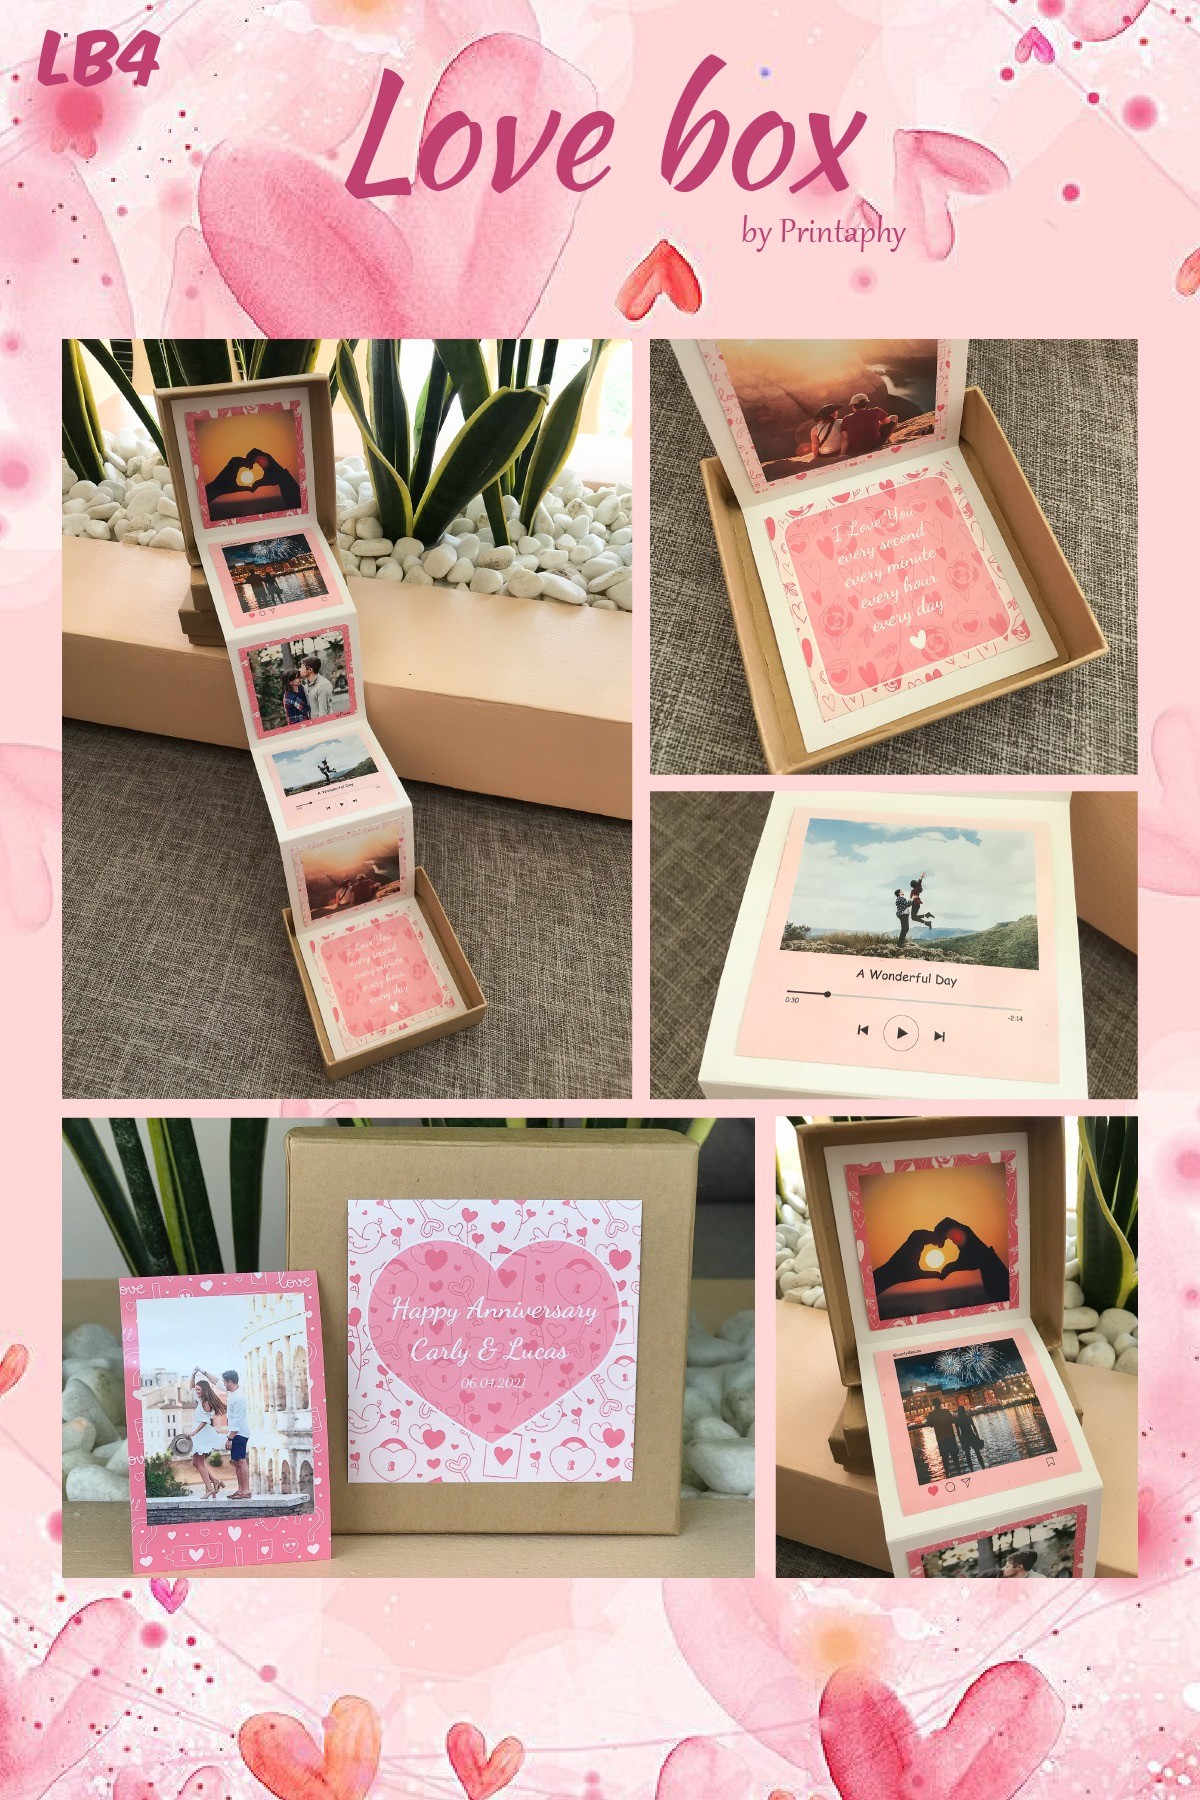 Love Box Pinky Love – LB4